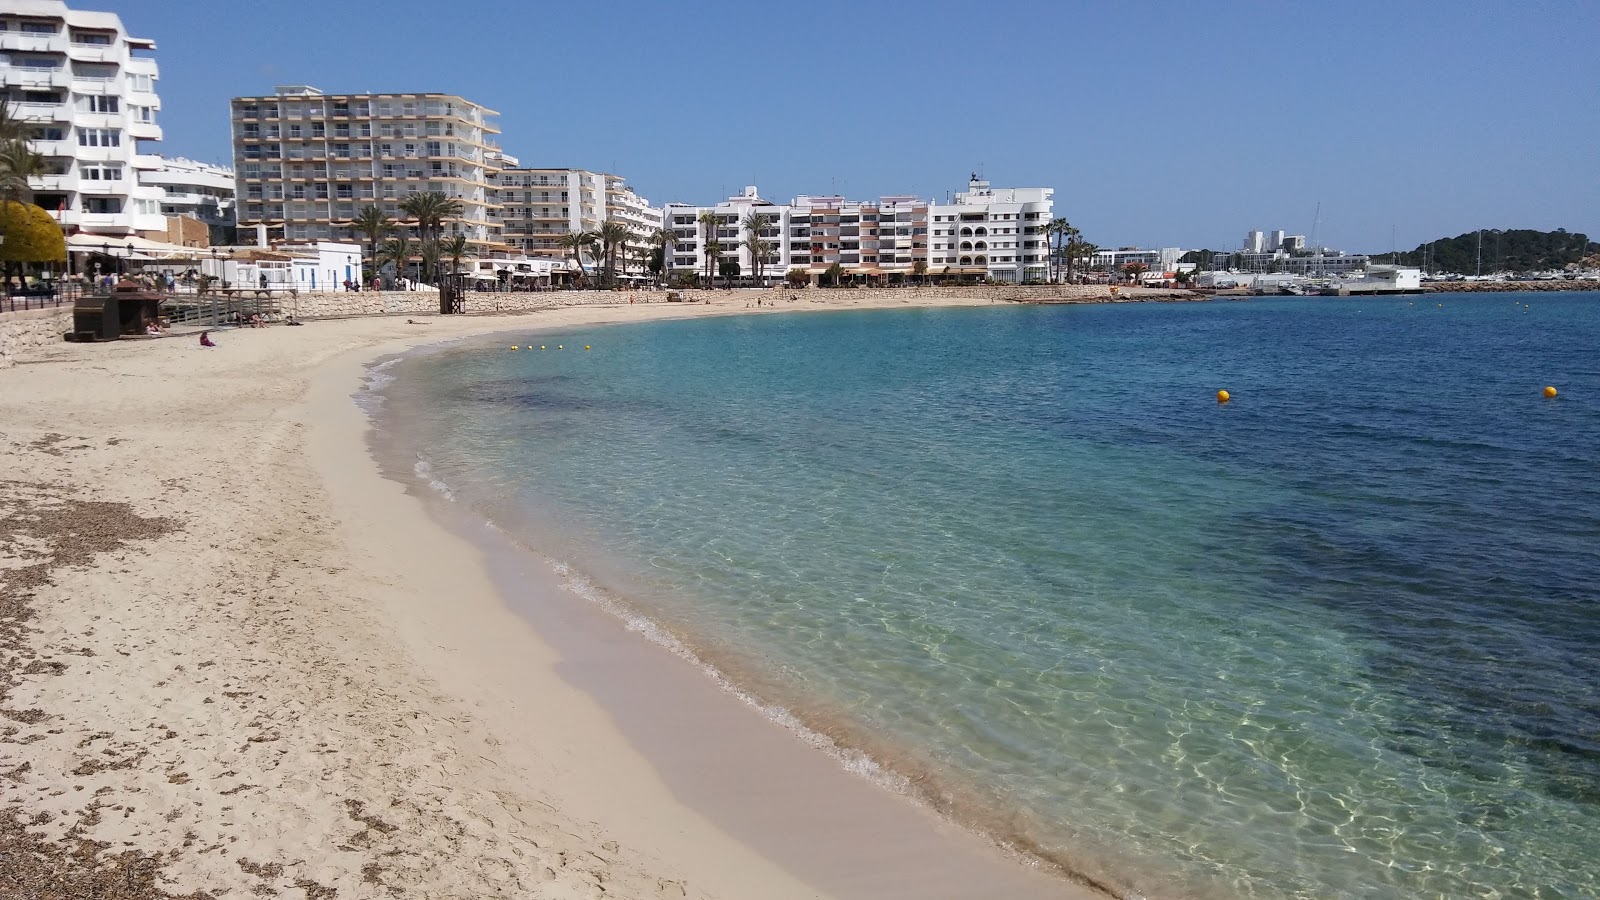 Photo of Platja de Santa Eulalia with bright fine sand surface